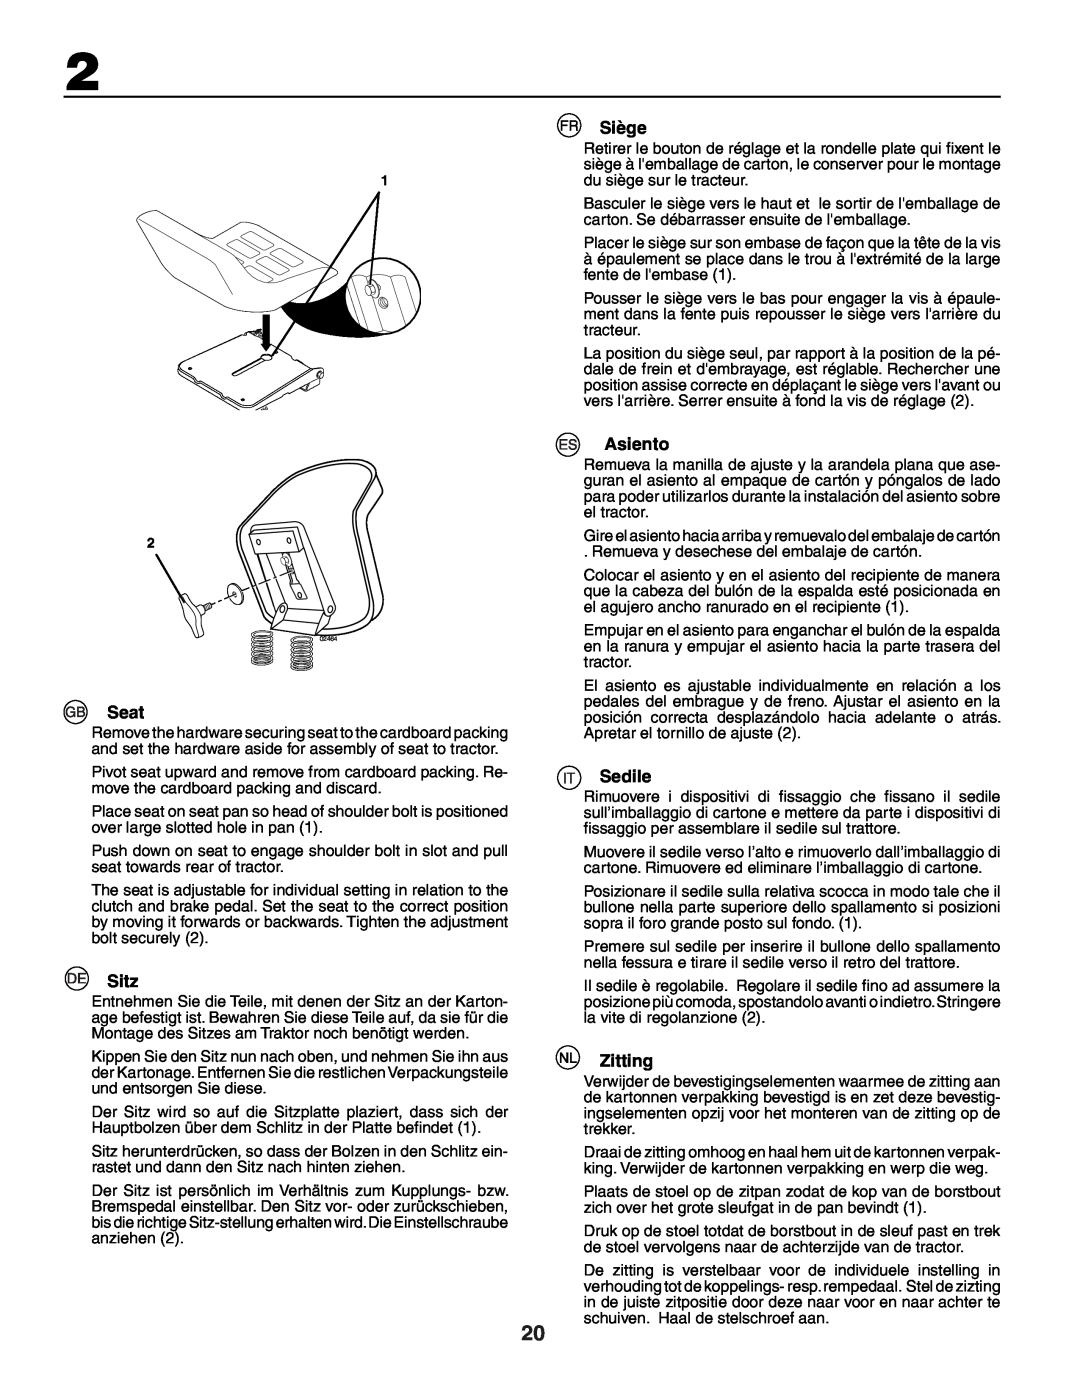 Husqvarna YTH151 instruction manual Seat, Sitz, Siège, Asiento, Sedile, Zitting 